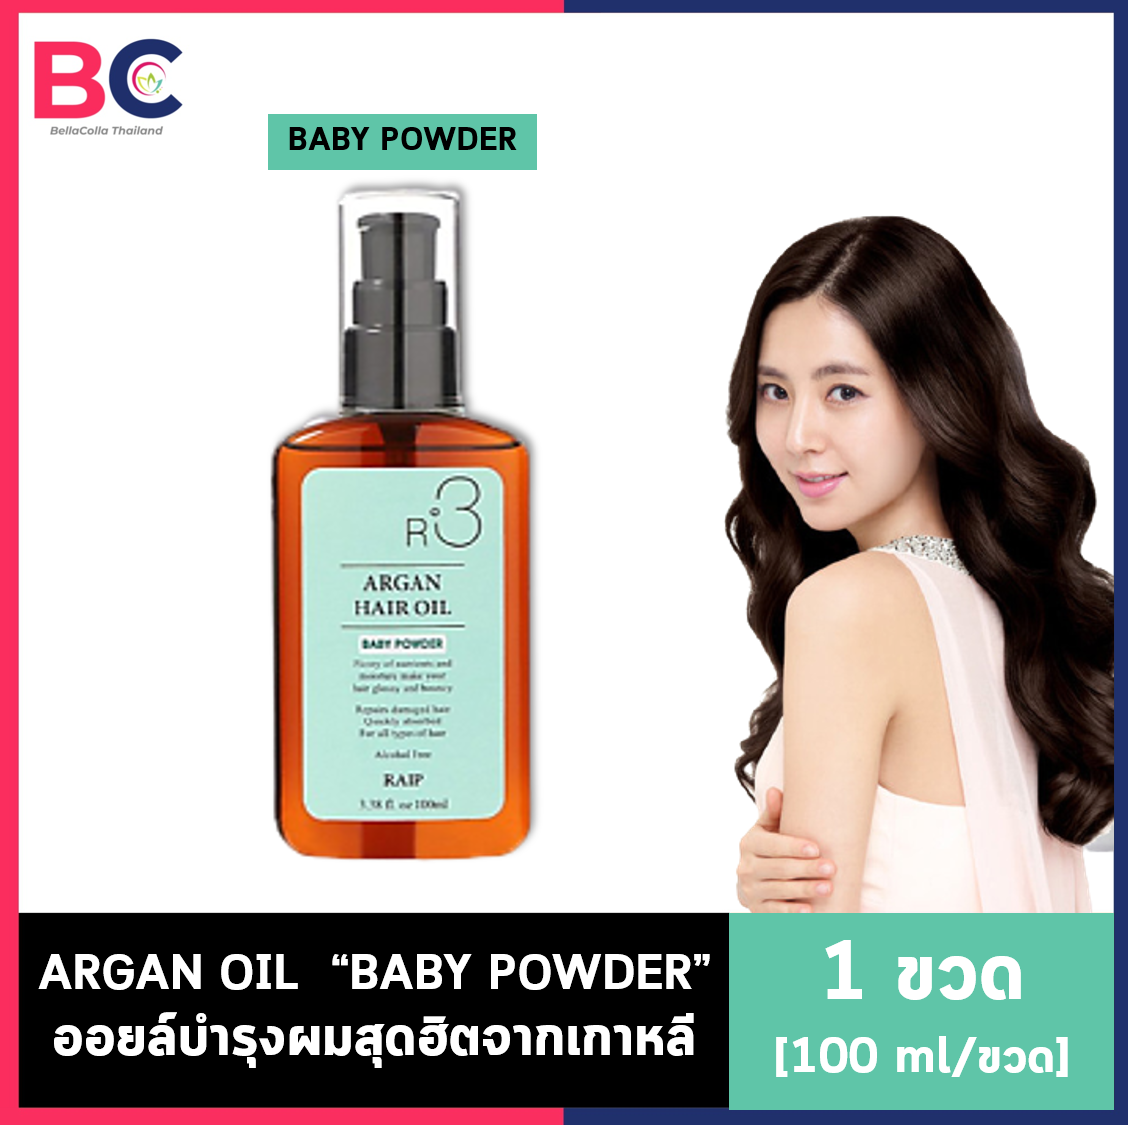 Argan Hair Oil R3 สูตร Baby Powder [100 ml./ขวด] ออยล์ใส่ผมสุดฮิตจากเกาหลี สกัดจากน้ำมัน argan ช่วยซ่อมแซมผมที่ถูกทำร้าย ให้ผมนุ่ม เงางาม ไม่หยาบกระด้าง